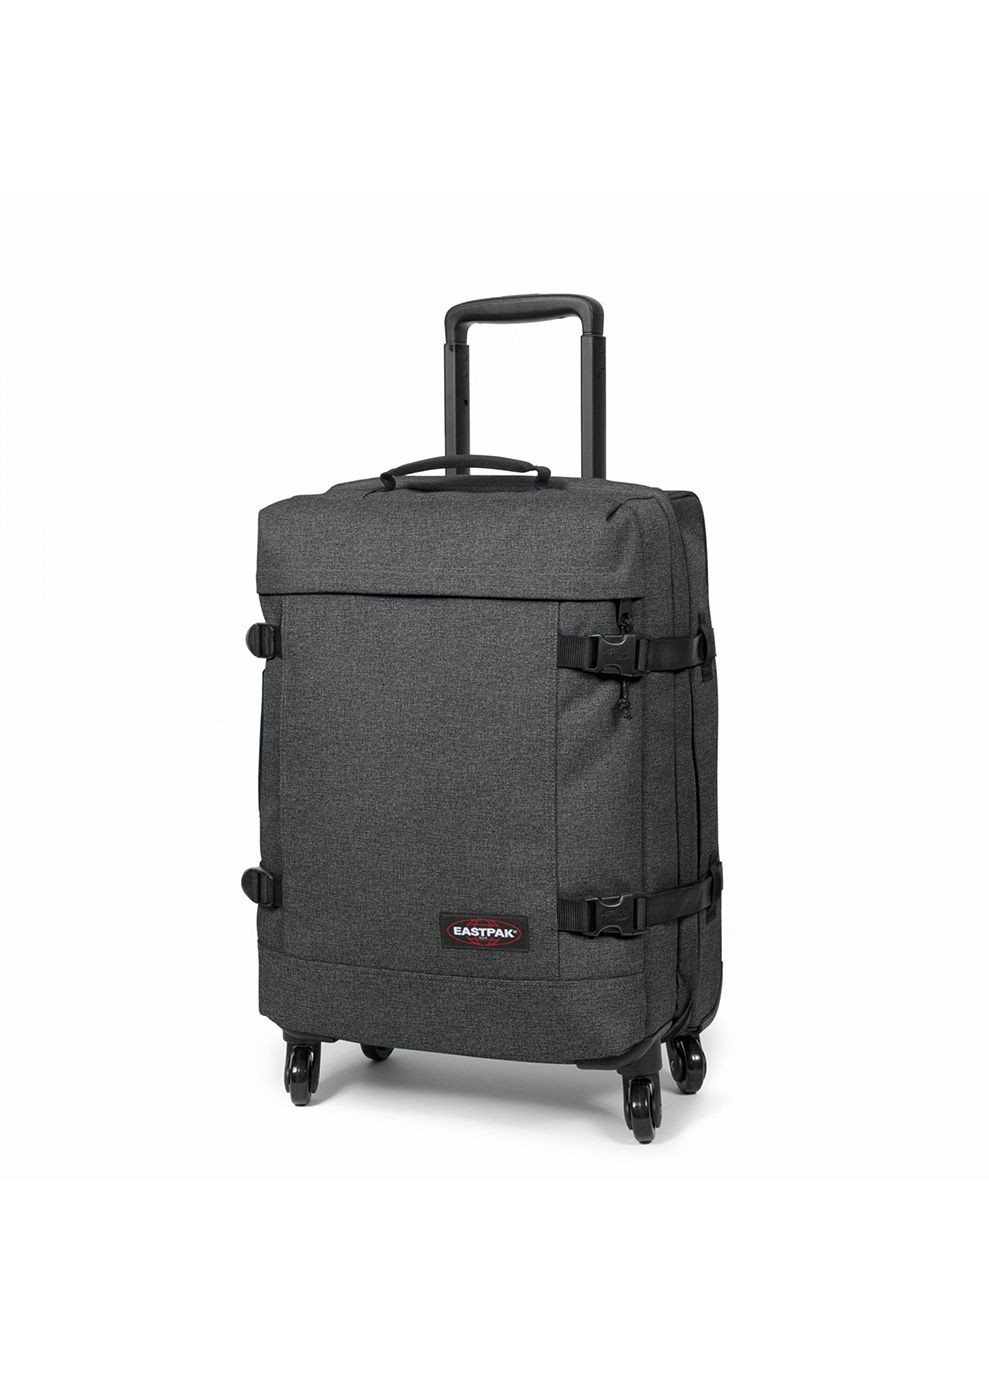 Малый чемодан TRANS4 S Серый Eastpak (268833101)